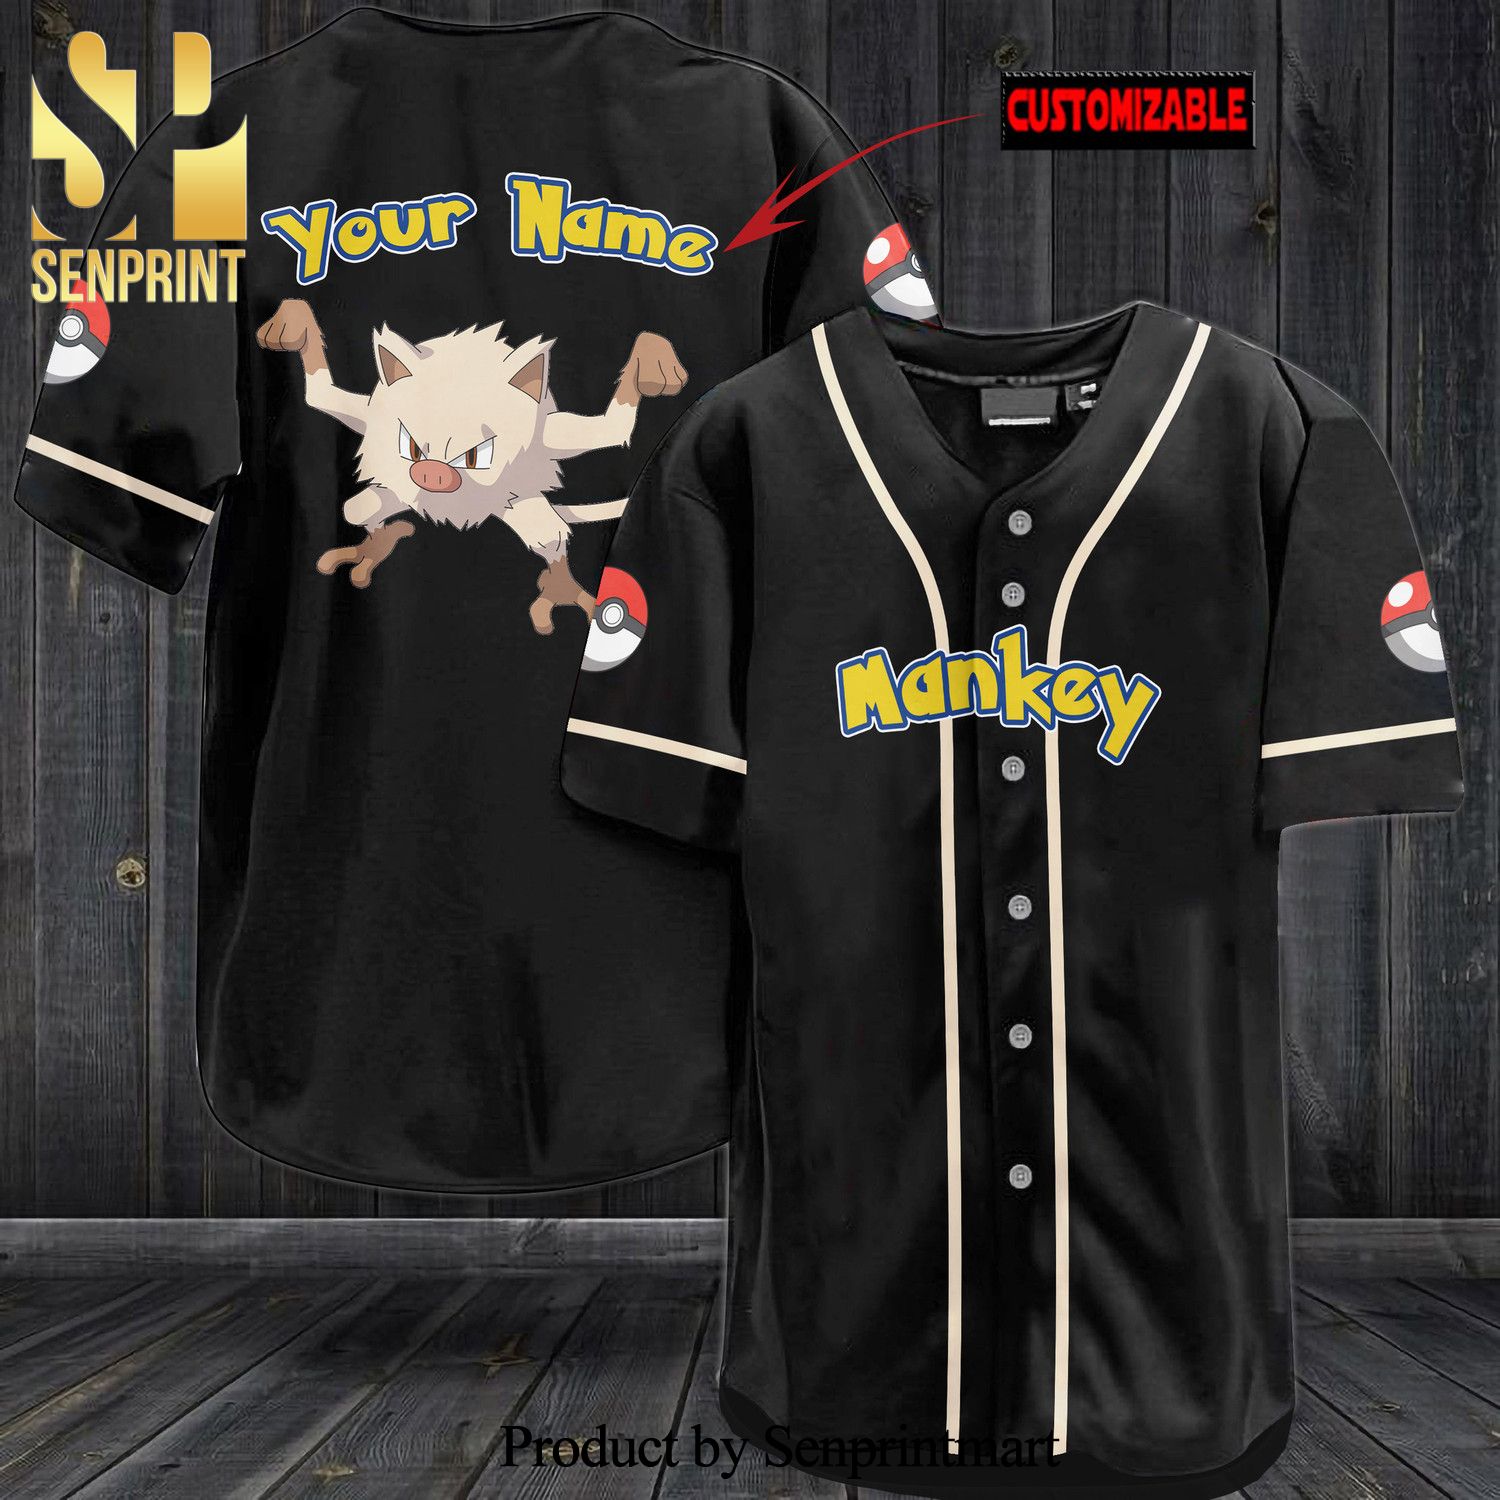 Personalized Mankey All Over Print Baseball Jersey – Black